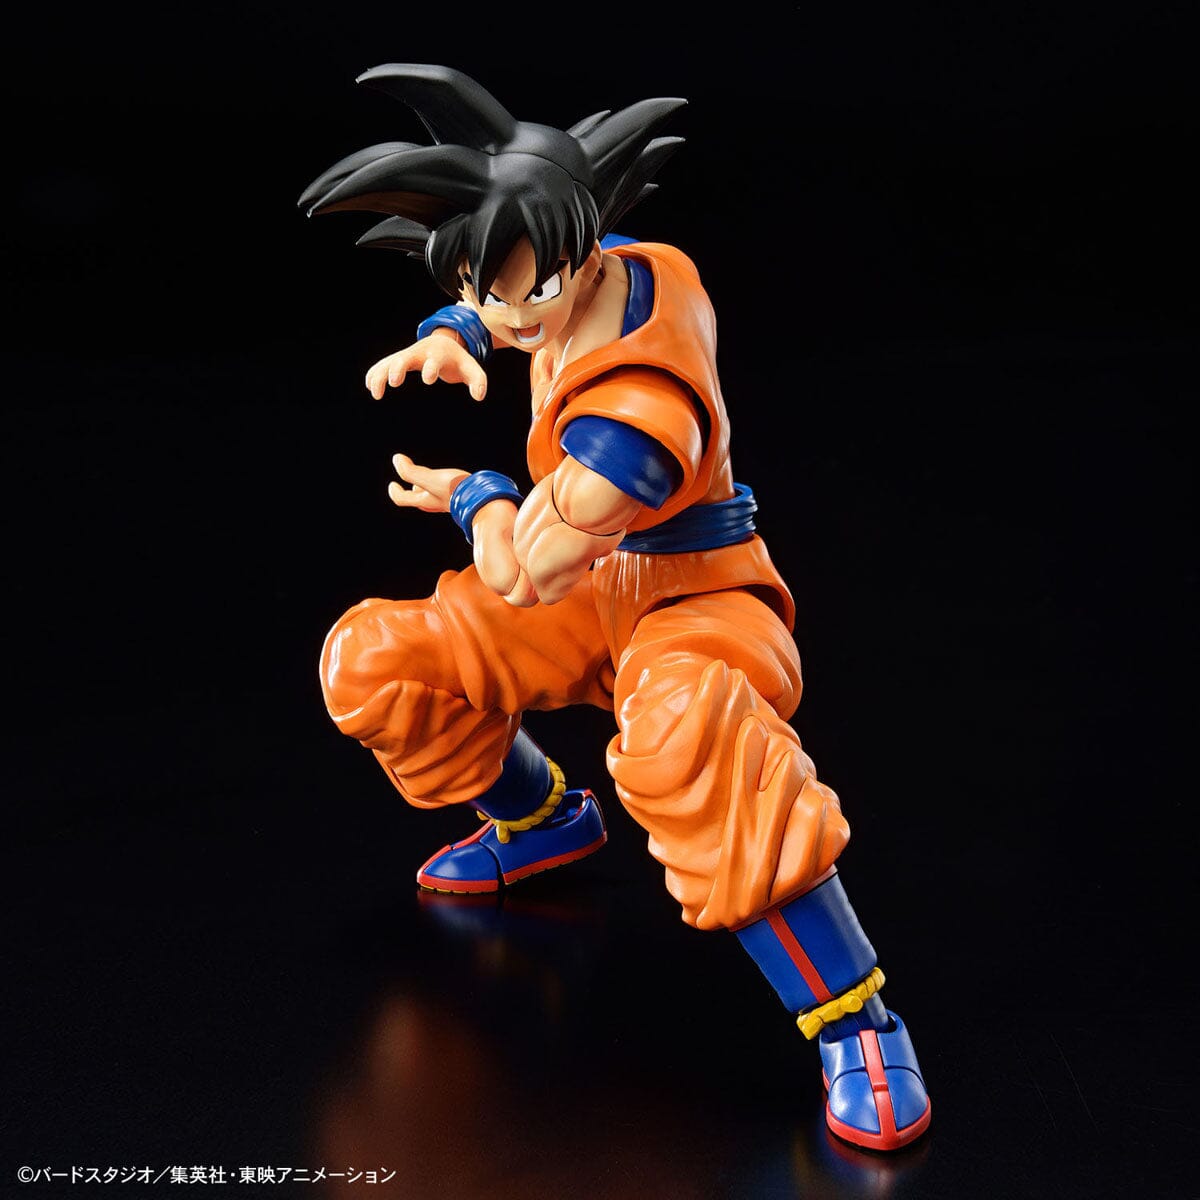 Grande figurine Goku dragon ball z dbz figure rare - Dragon Ball | Beebs